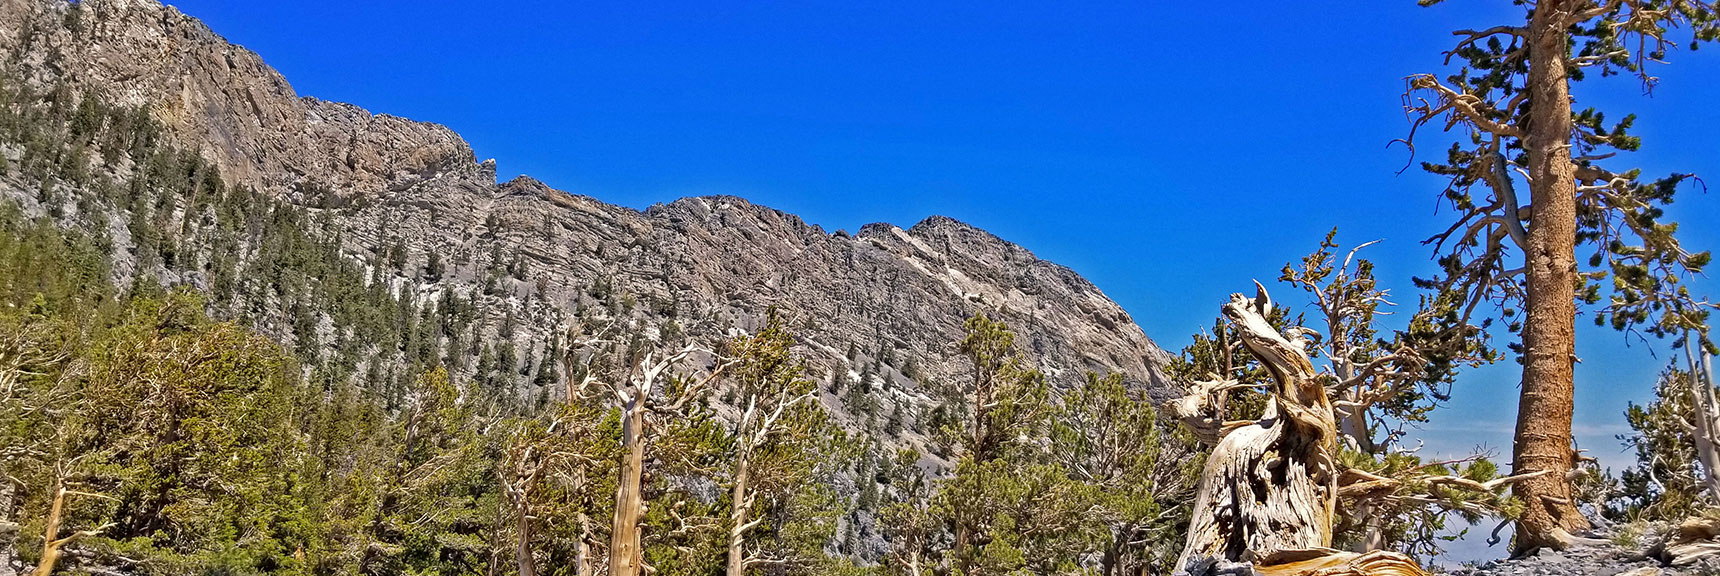 True NW Summit of Macks Peak, 10,036ft Little Over 100ft Higher Than SE Summit. | Macks Peak | Mt Charleston Wilderness | Spring Mountains, Nevada